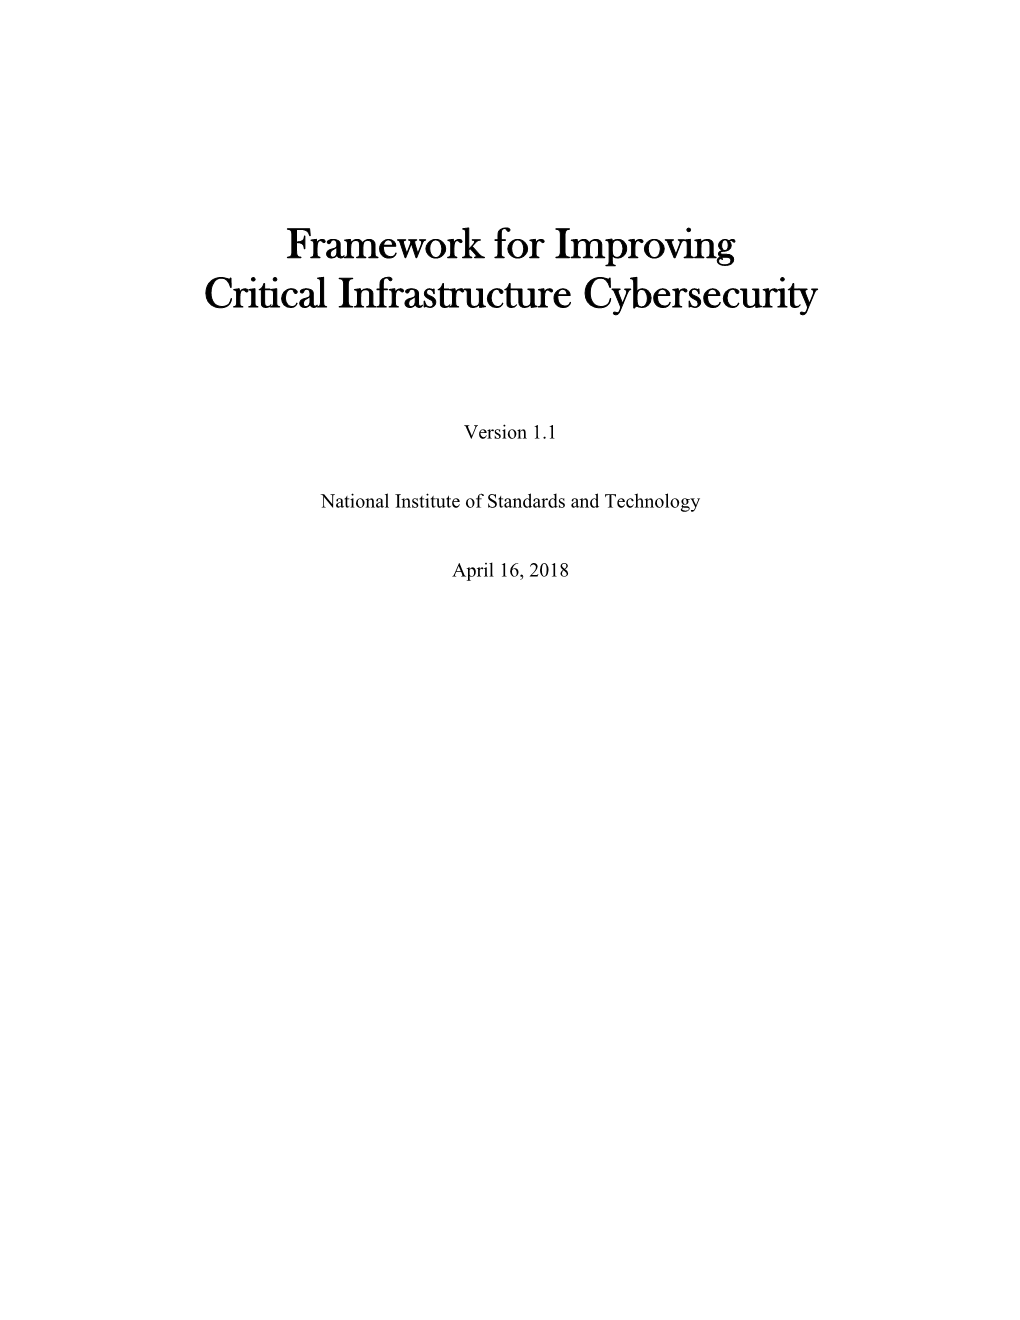 Framework for Improving Critical Infrastructure